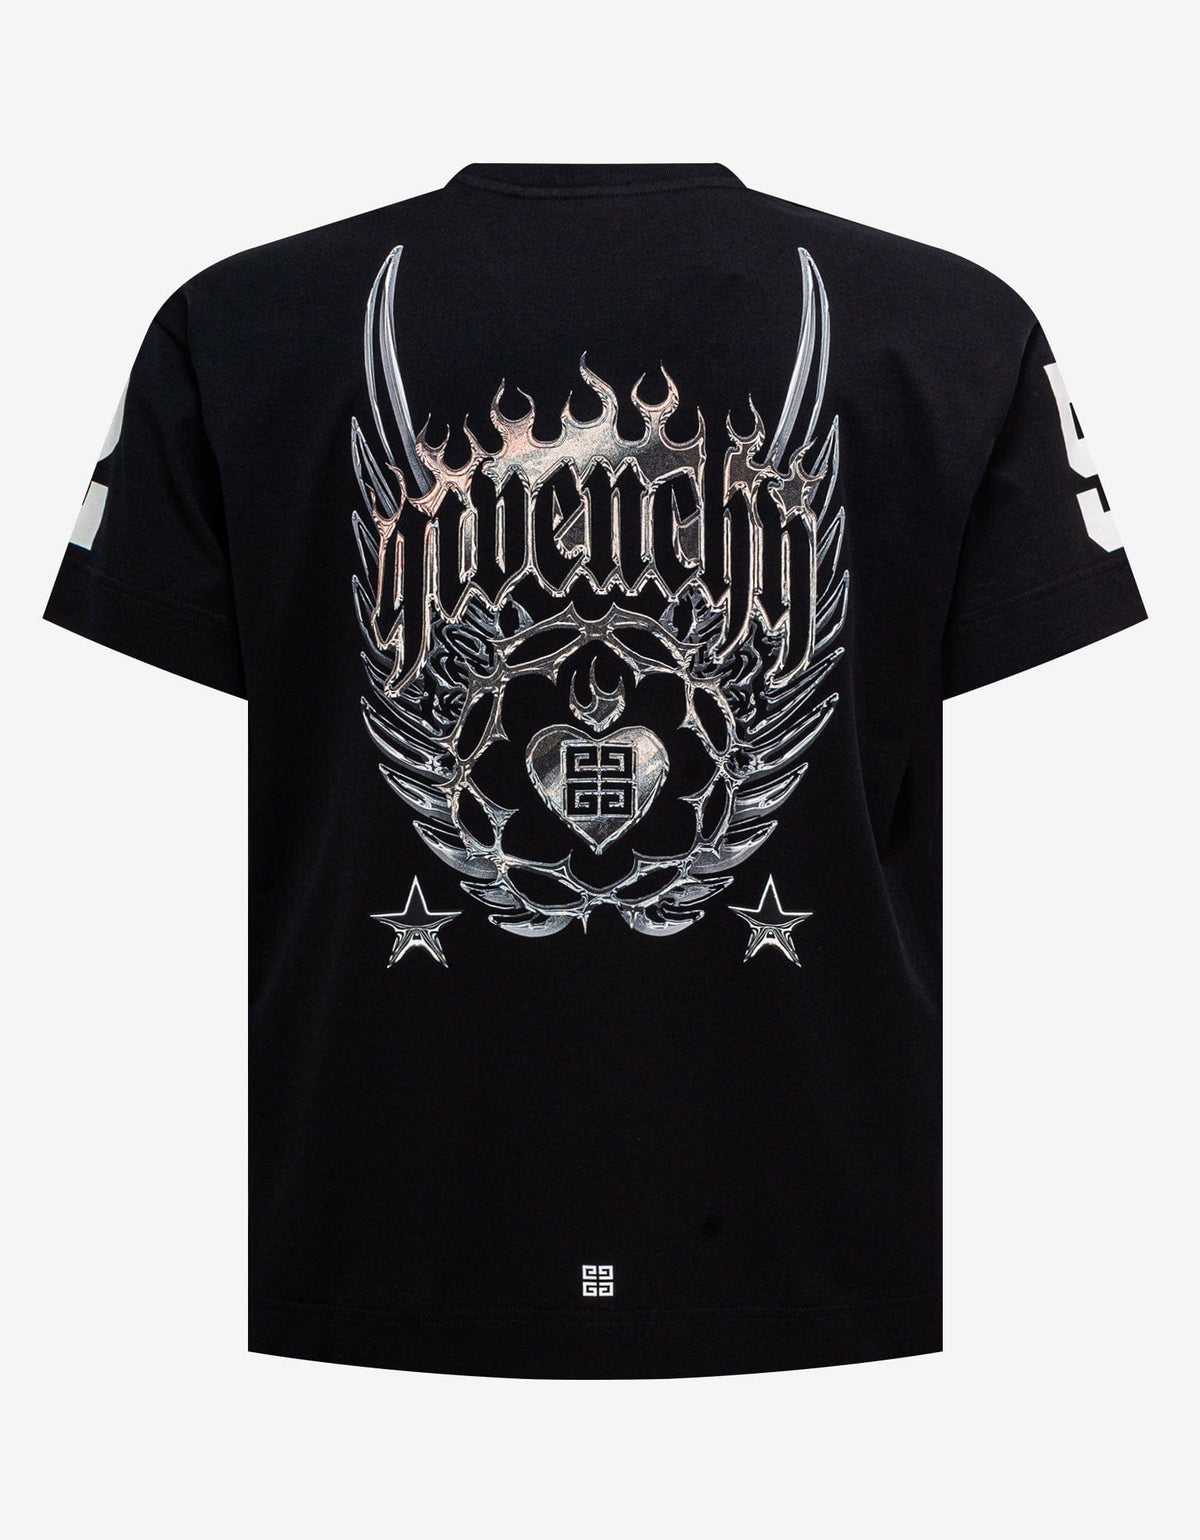 Givenchy Givenchy Black Graphic T-Shirt